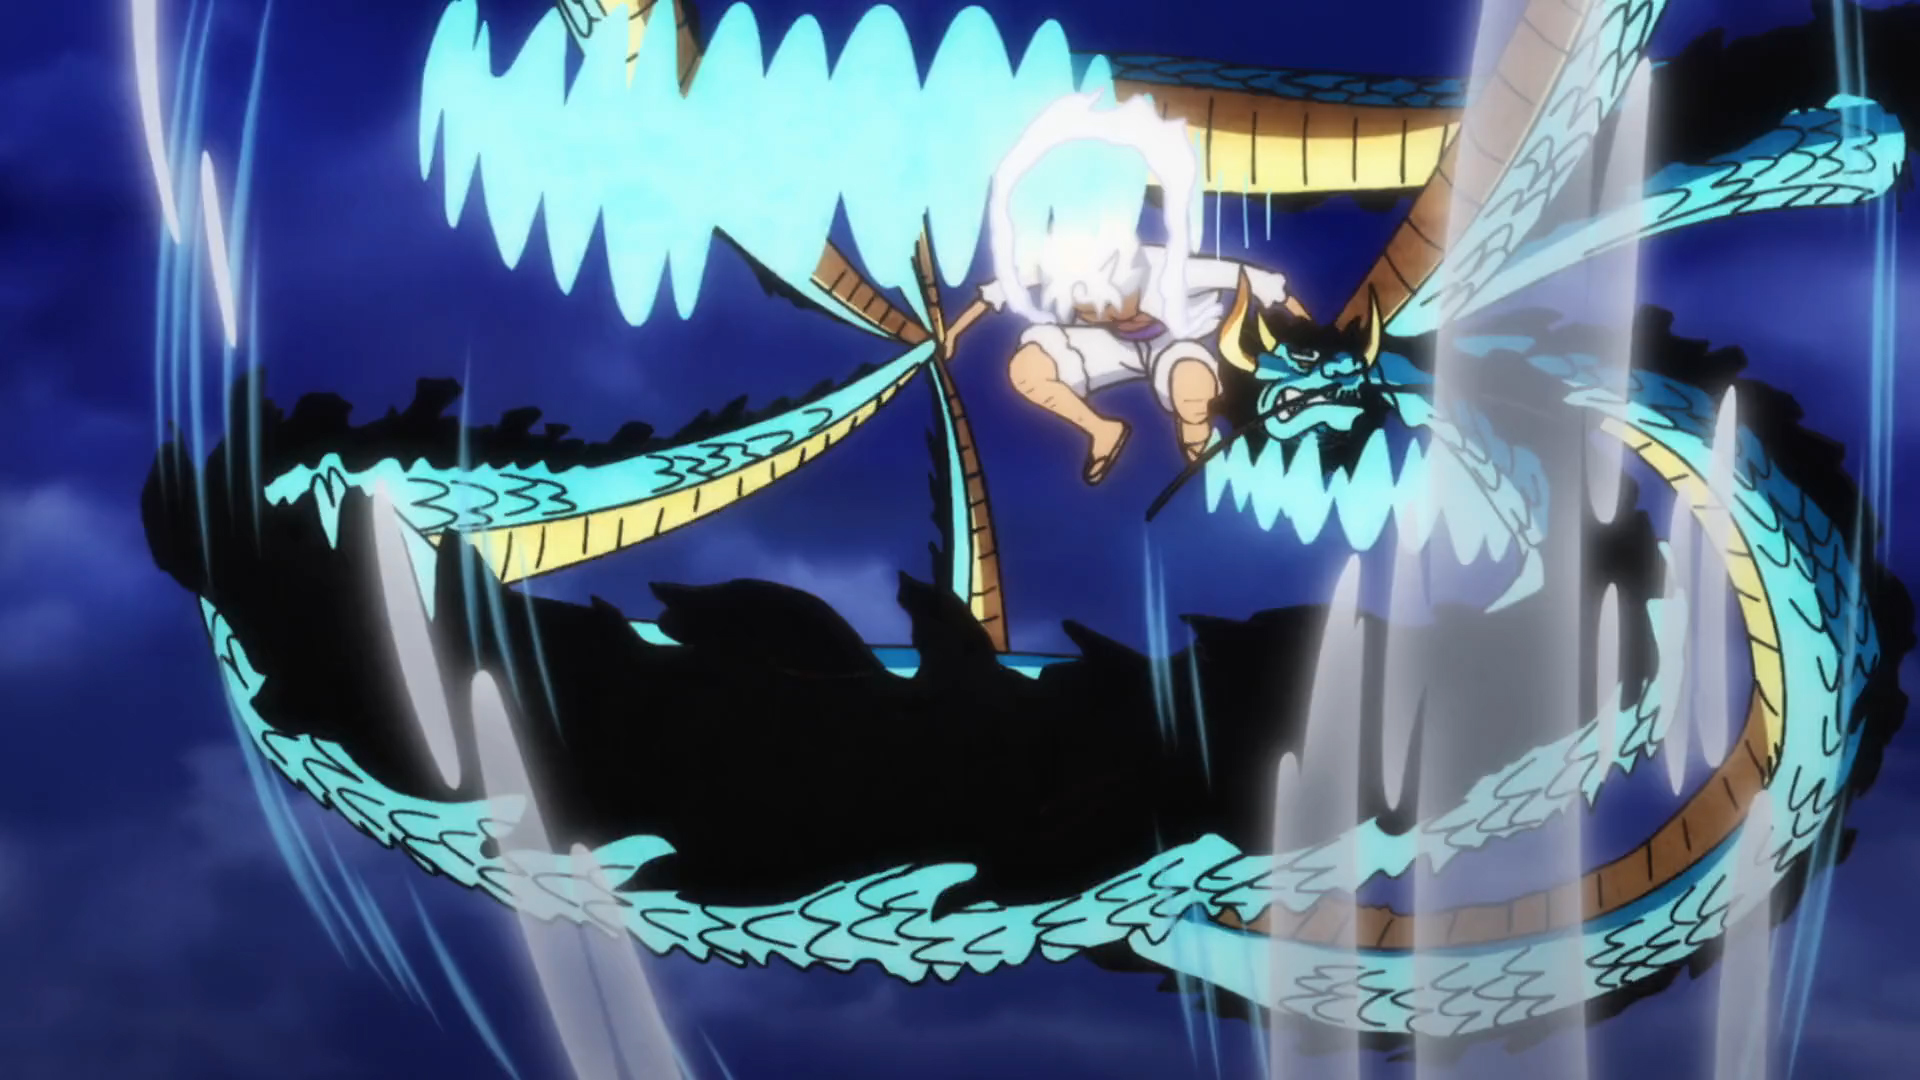 Video wallpaper One Piece - Luffy vs Kaido Cybust (Anime)